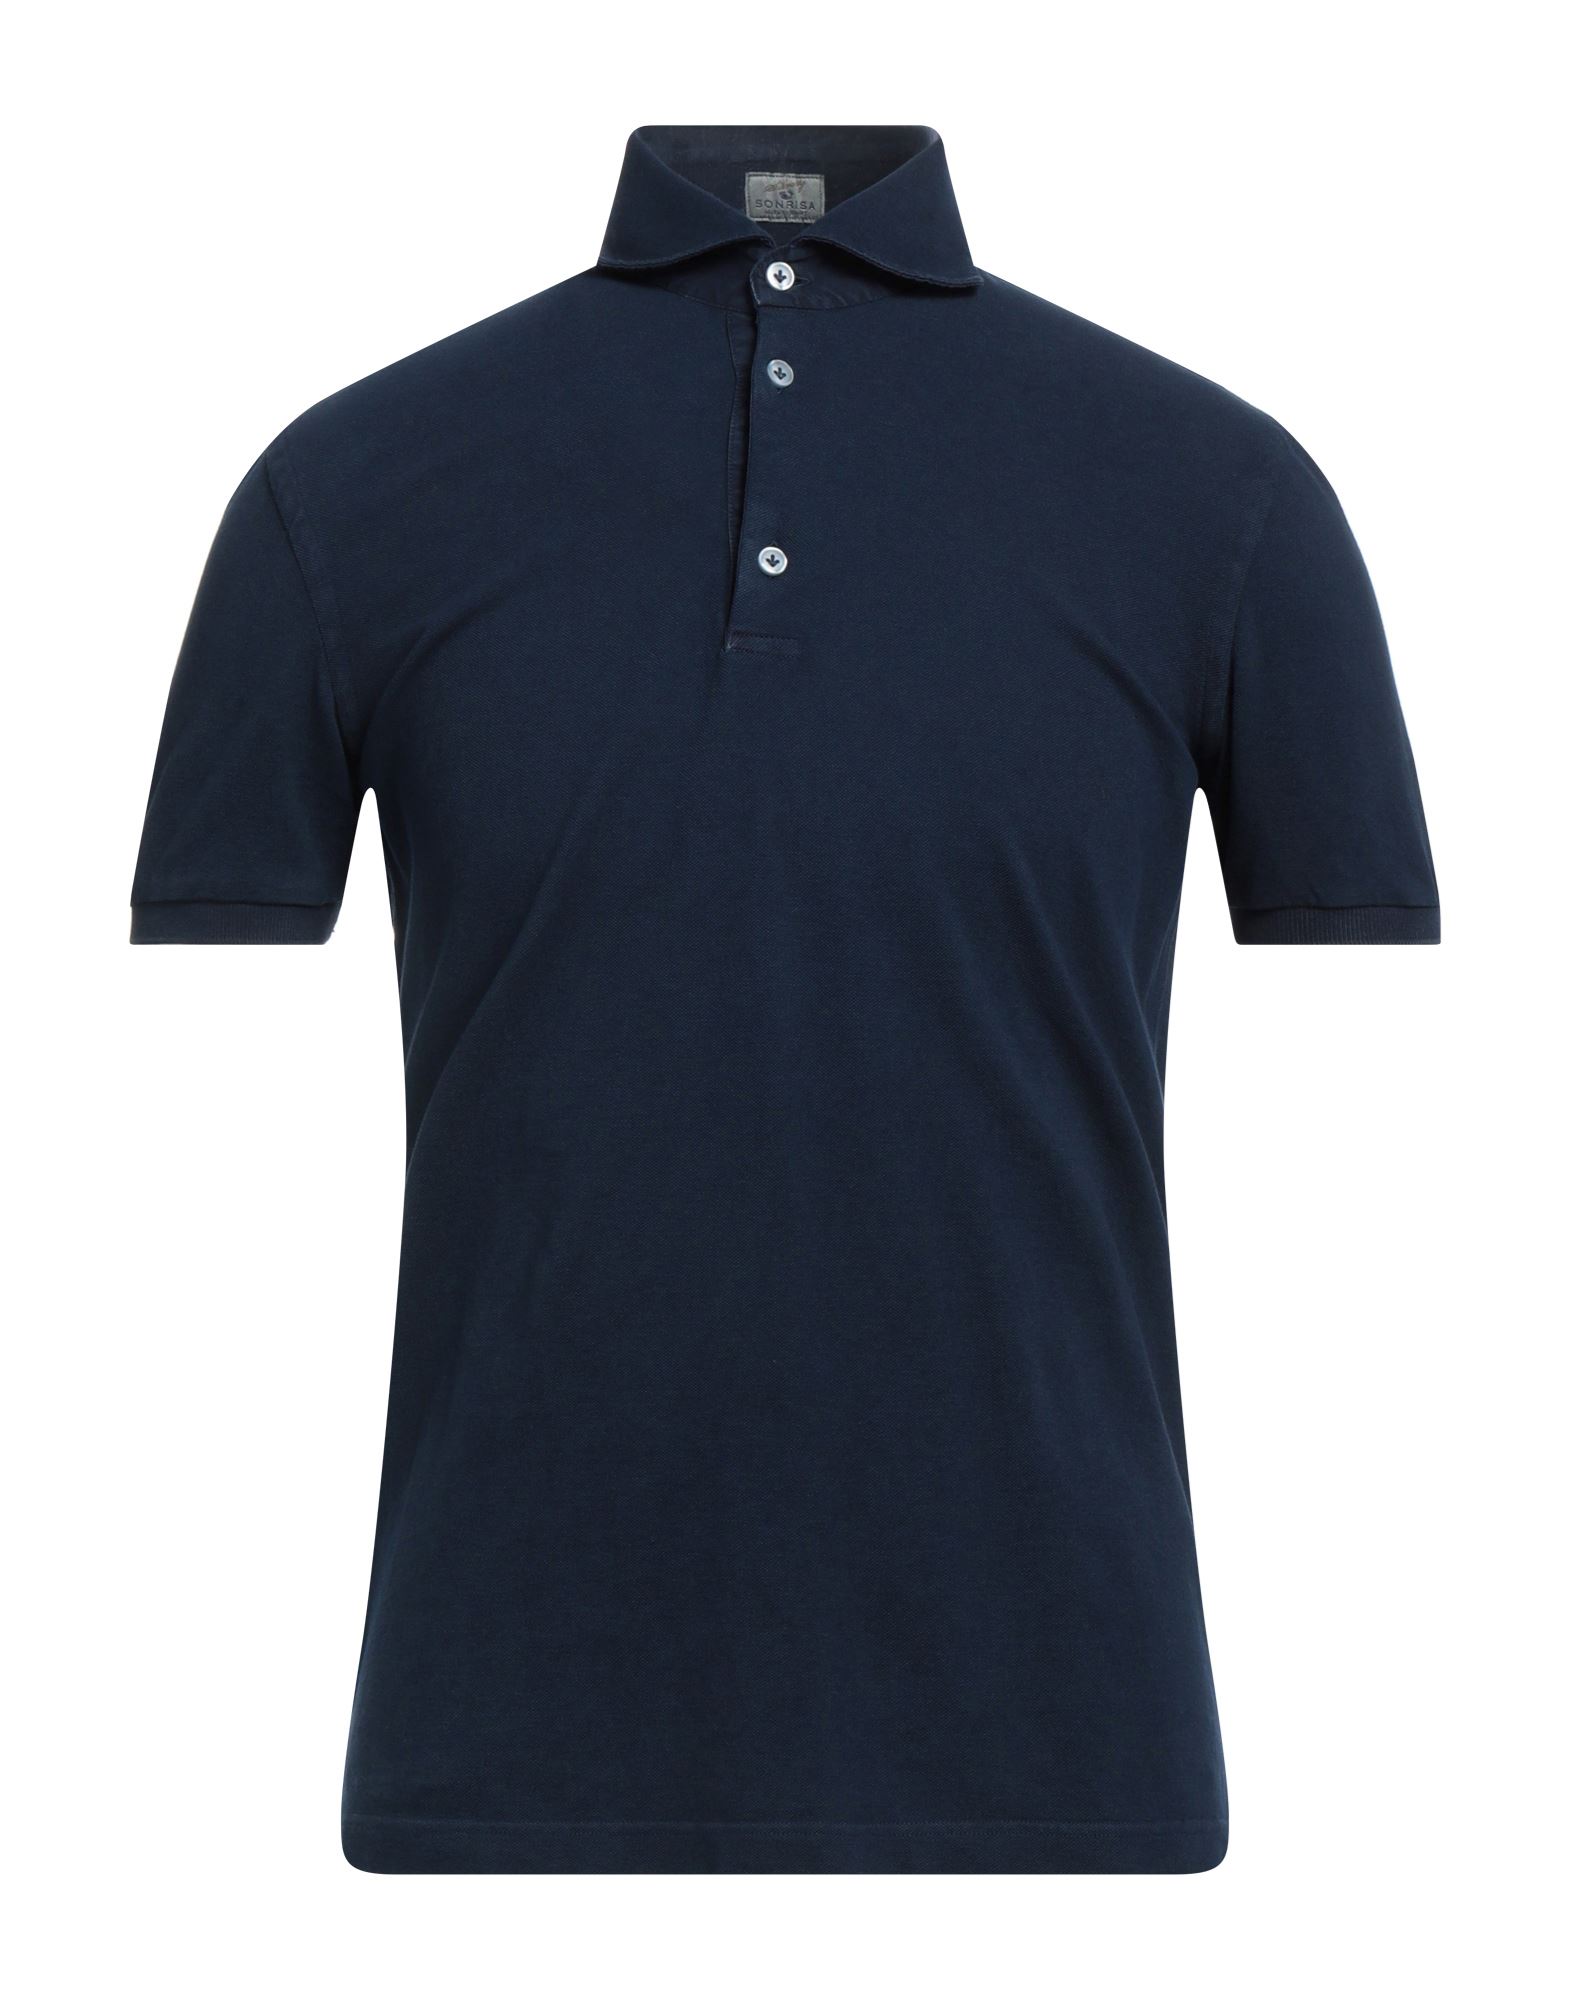 Sonrisa Polo Shirts In Navy Blue